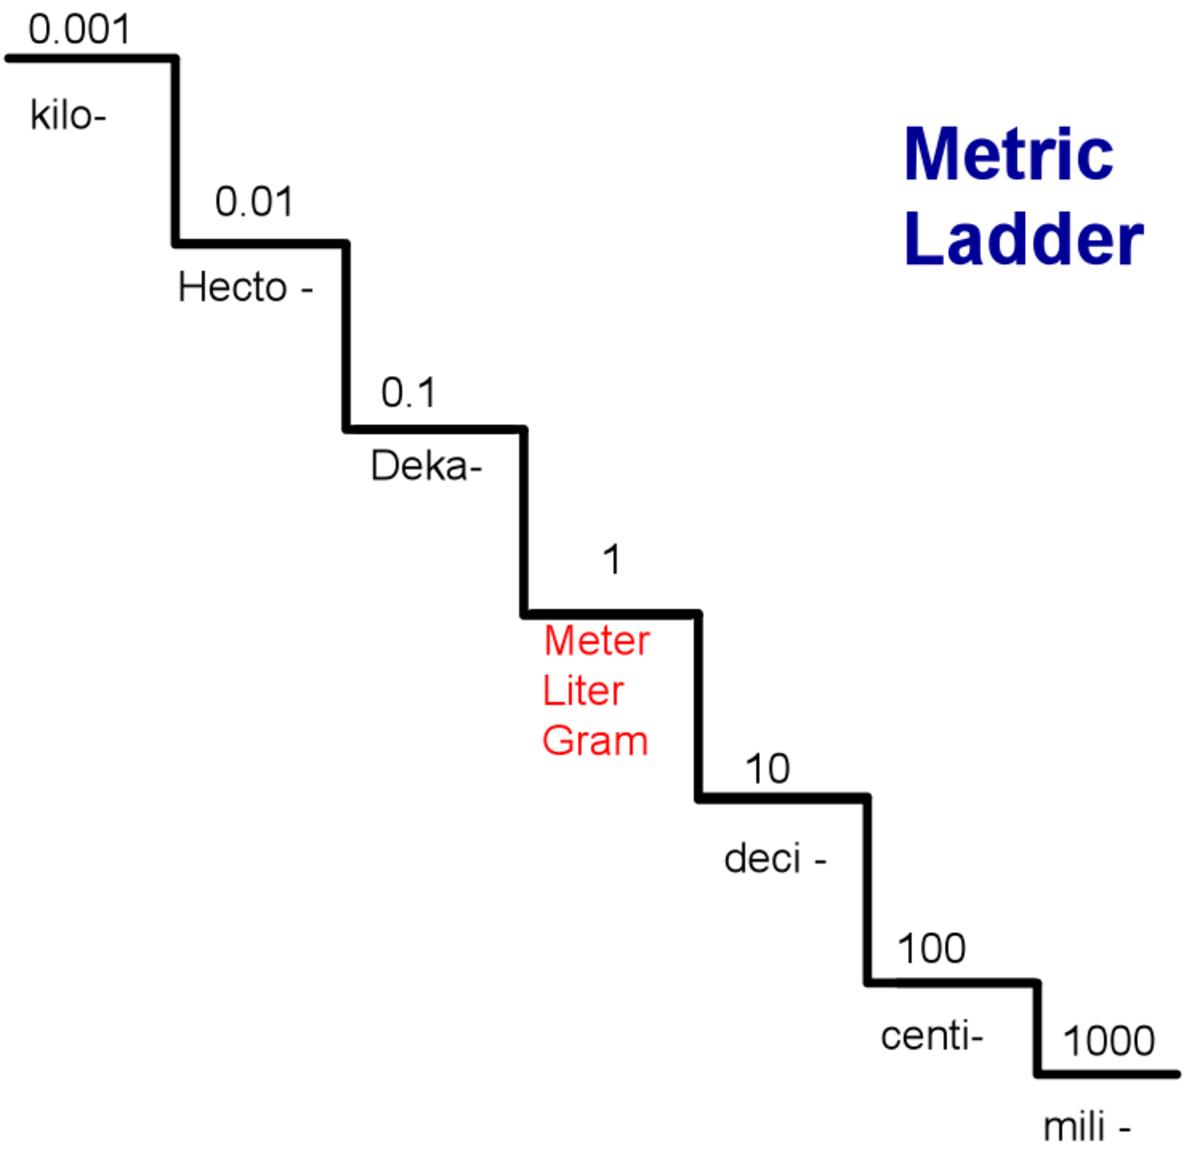 Metric Staircase Chart